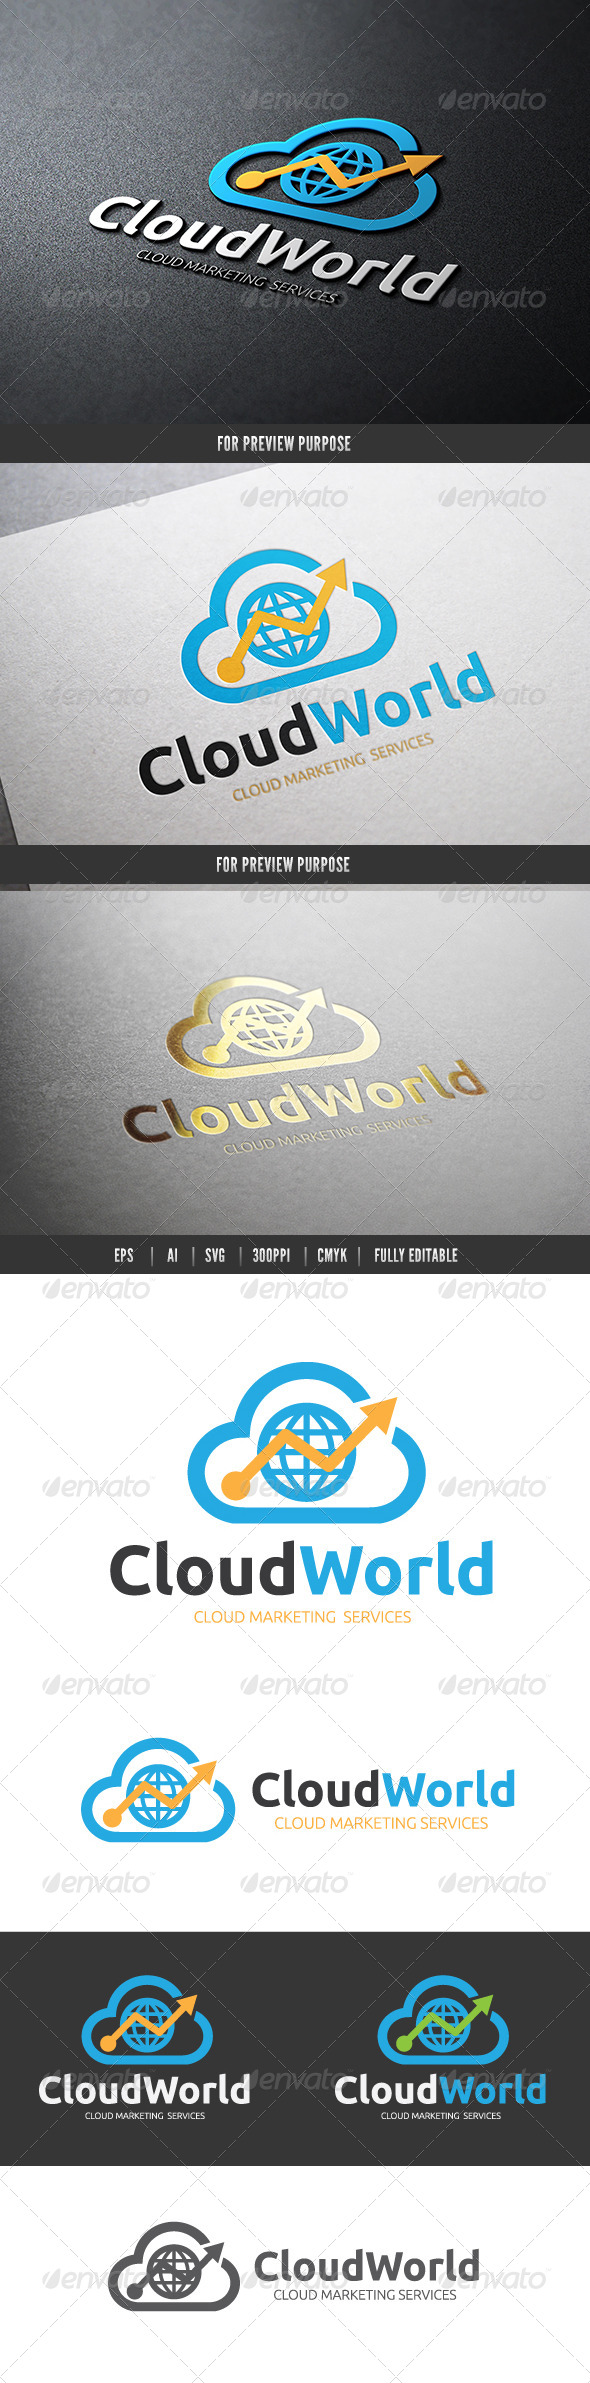 Cloud Marketing World